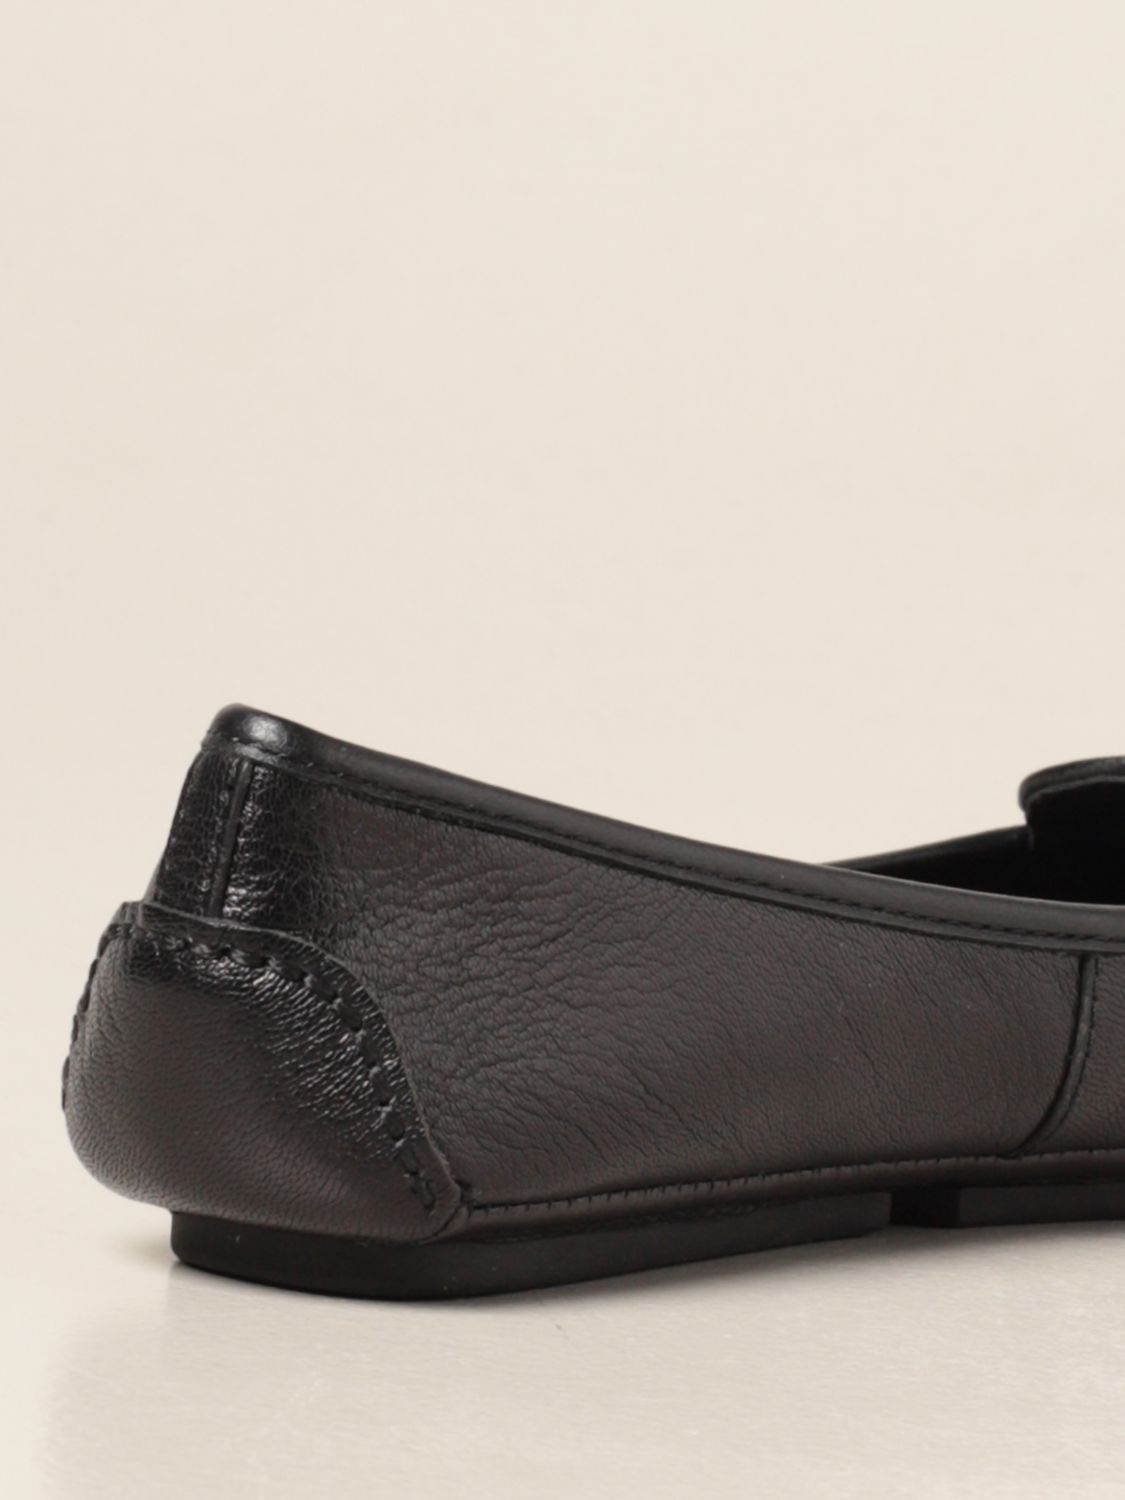 michael kors black dress shoes